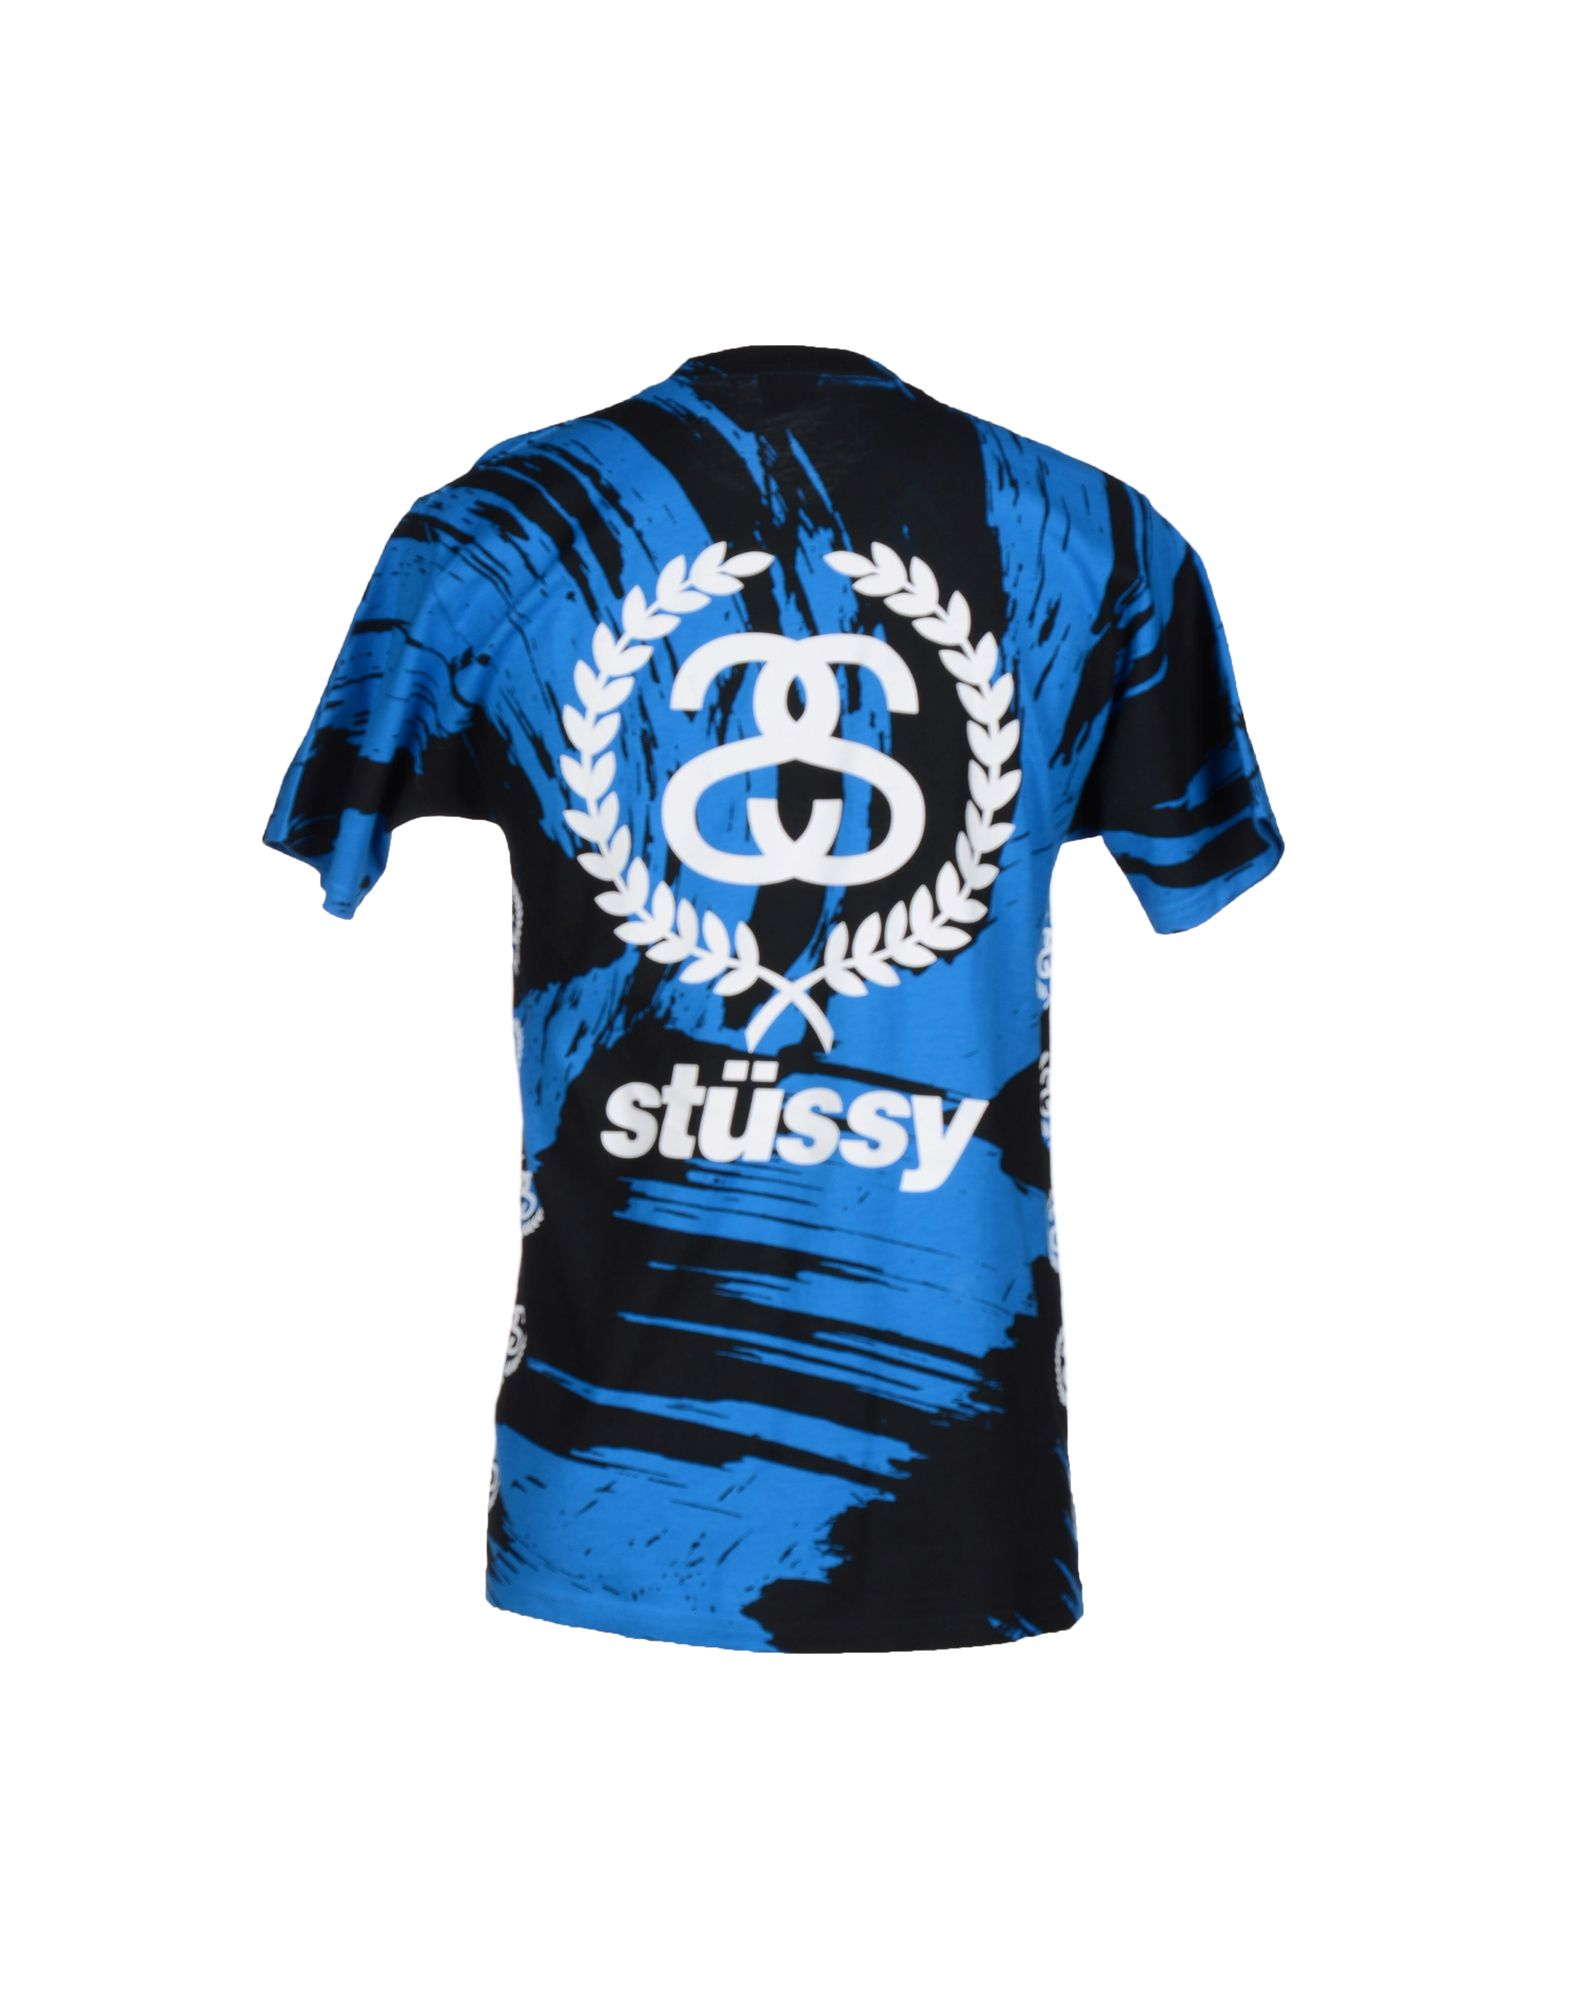 Lyst - Stussy T-shirt in Blue for Men